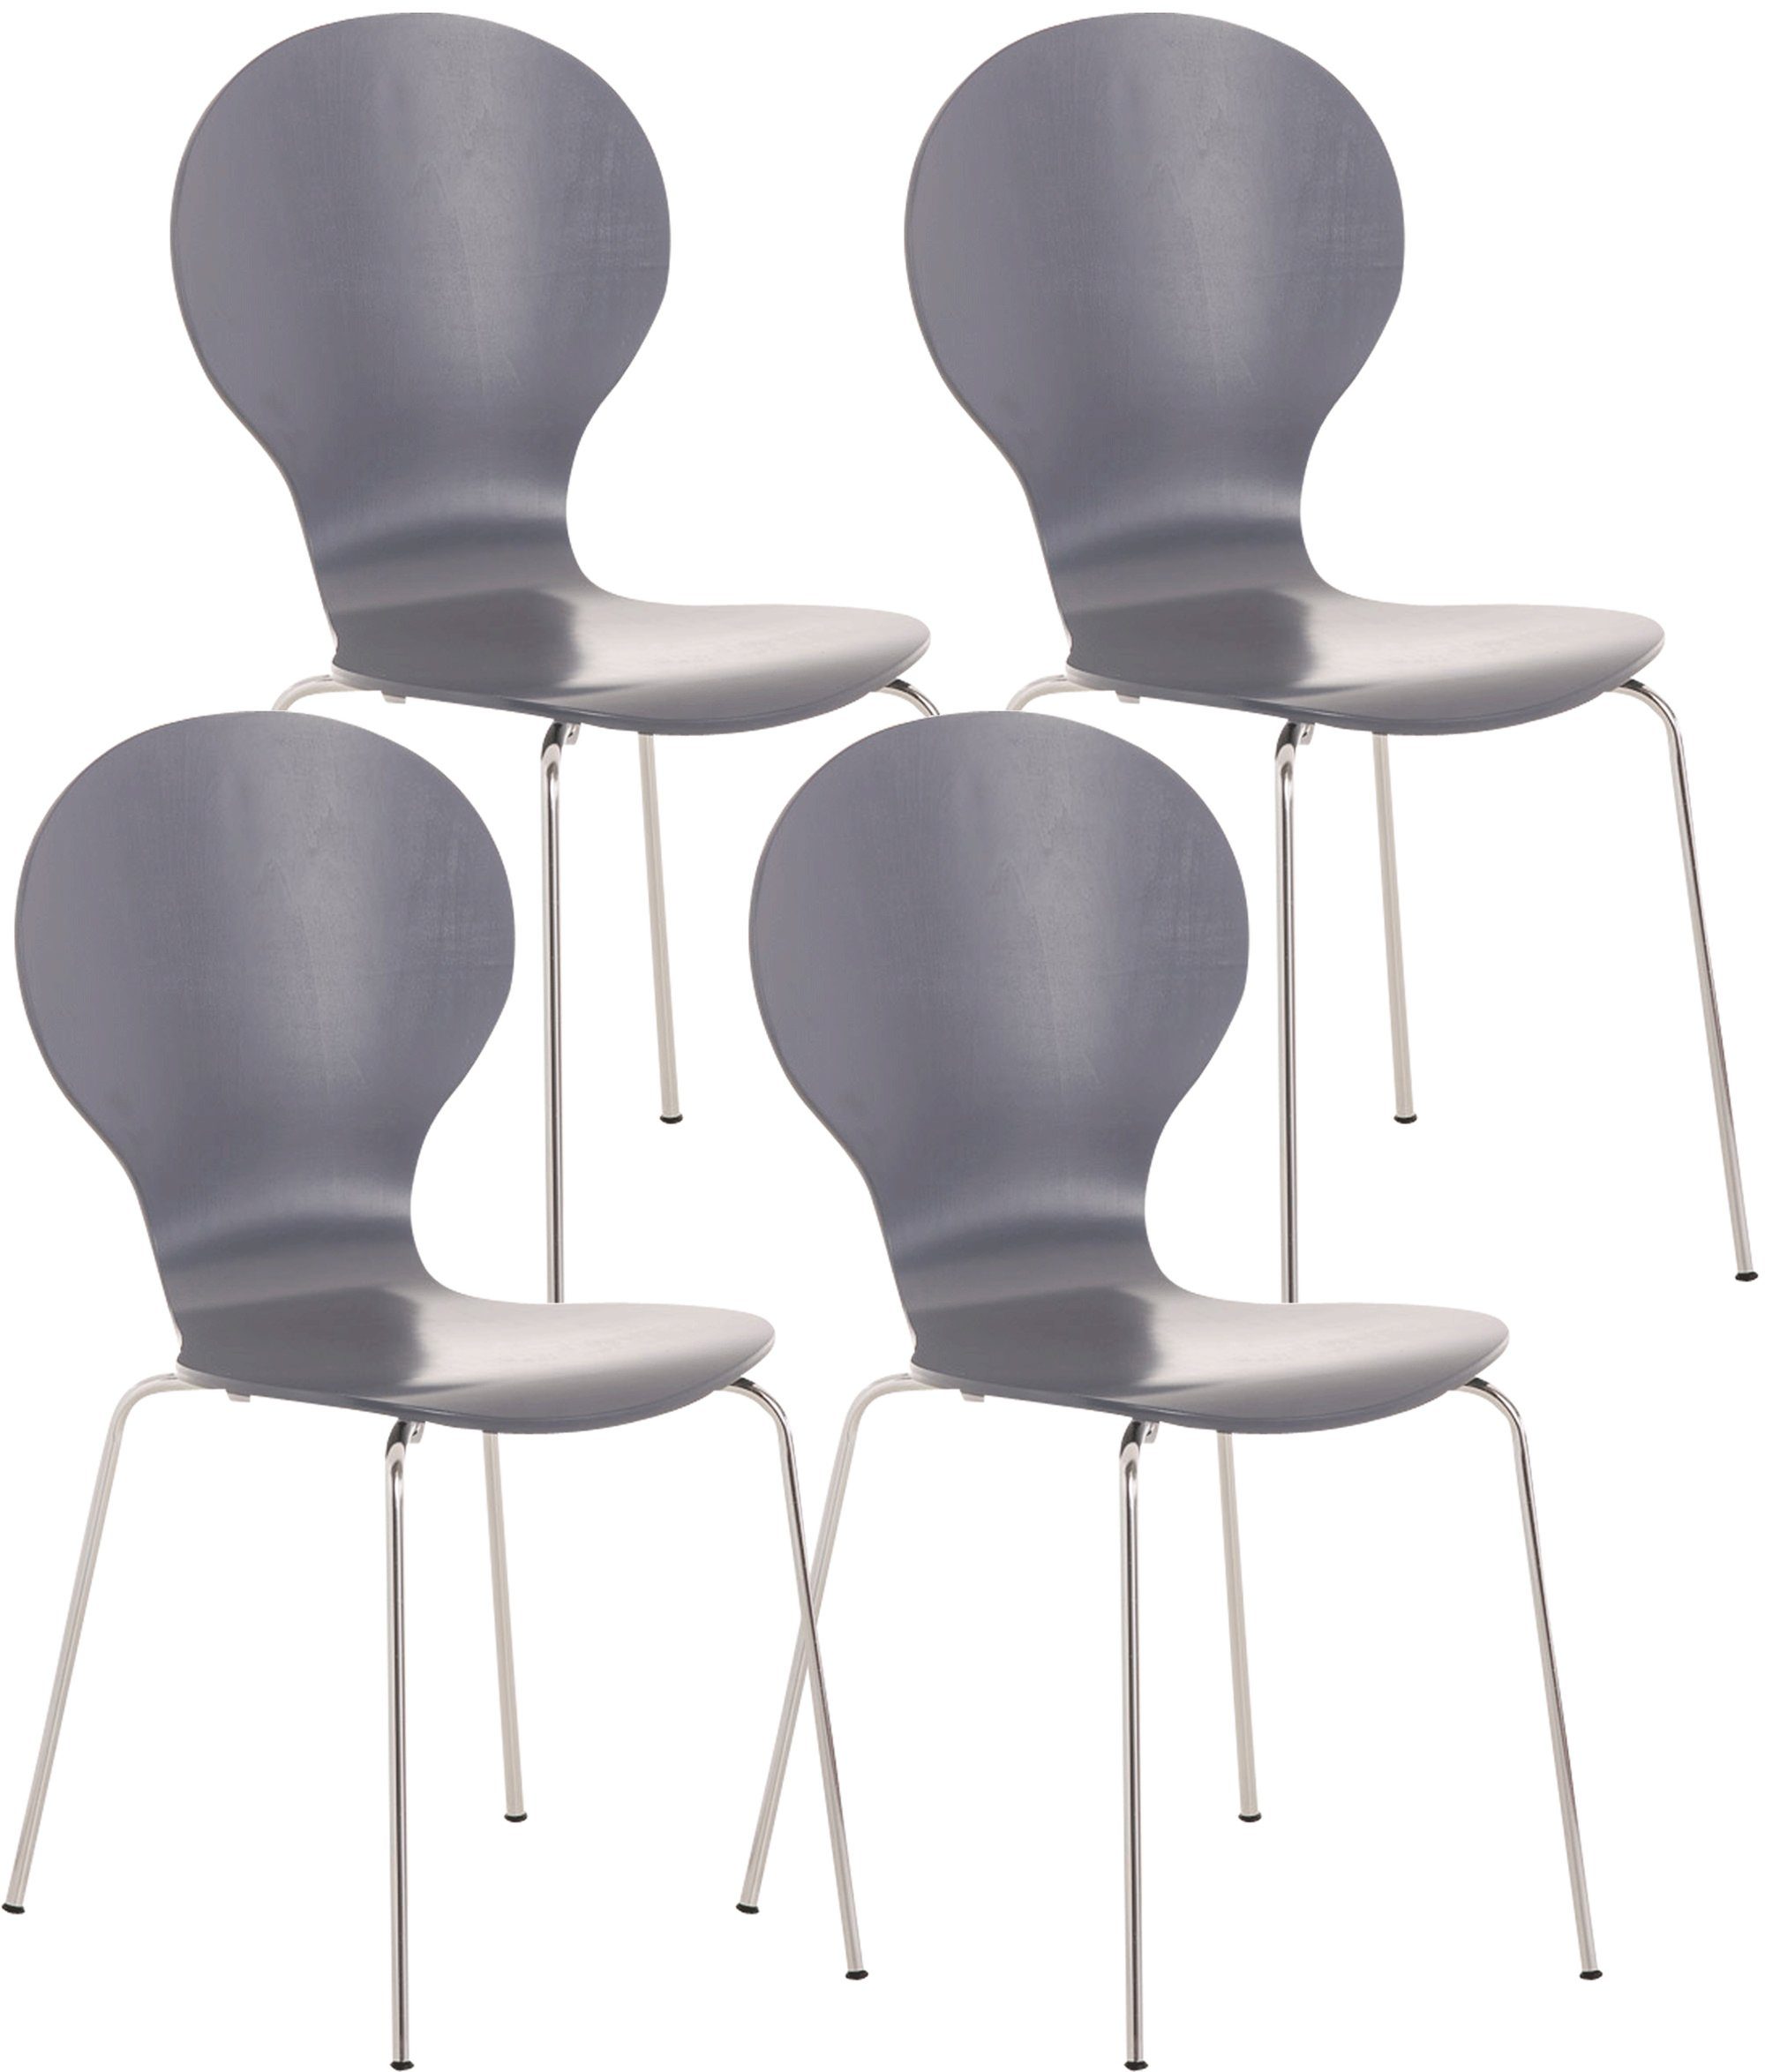 Daggy Messestuhl, mit Gestell: Besucherstuhl Sitzfläche TPFLiving - grau 4 chrom St), geformter (Besprechungsstuhl - Holz - Konferenzstuhl Warteraumstuhl - ergonomisch Metall Sitzfläche: